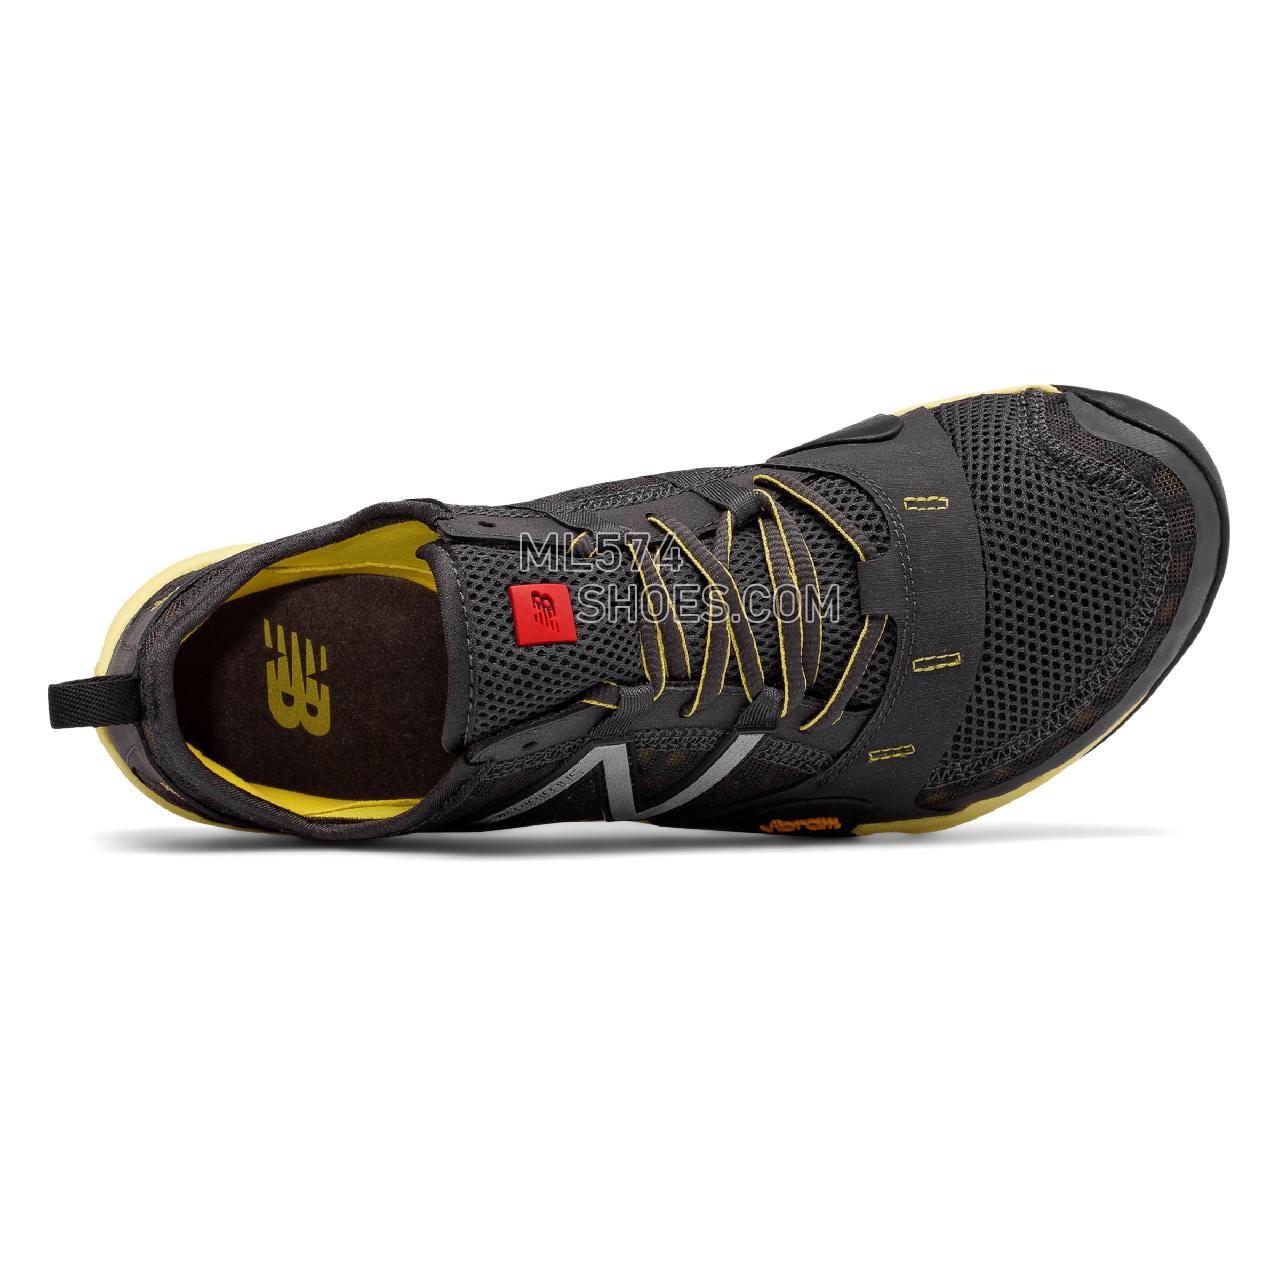 New Balance Minimus 10v1 Trail - Men's 10 - Running Dark Grey with Yellow - MT10GG